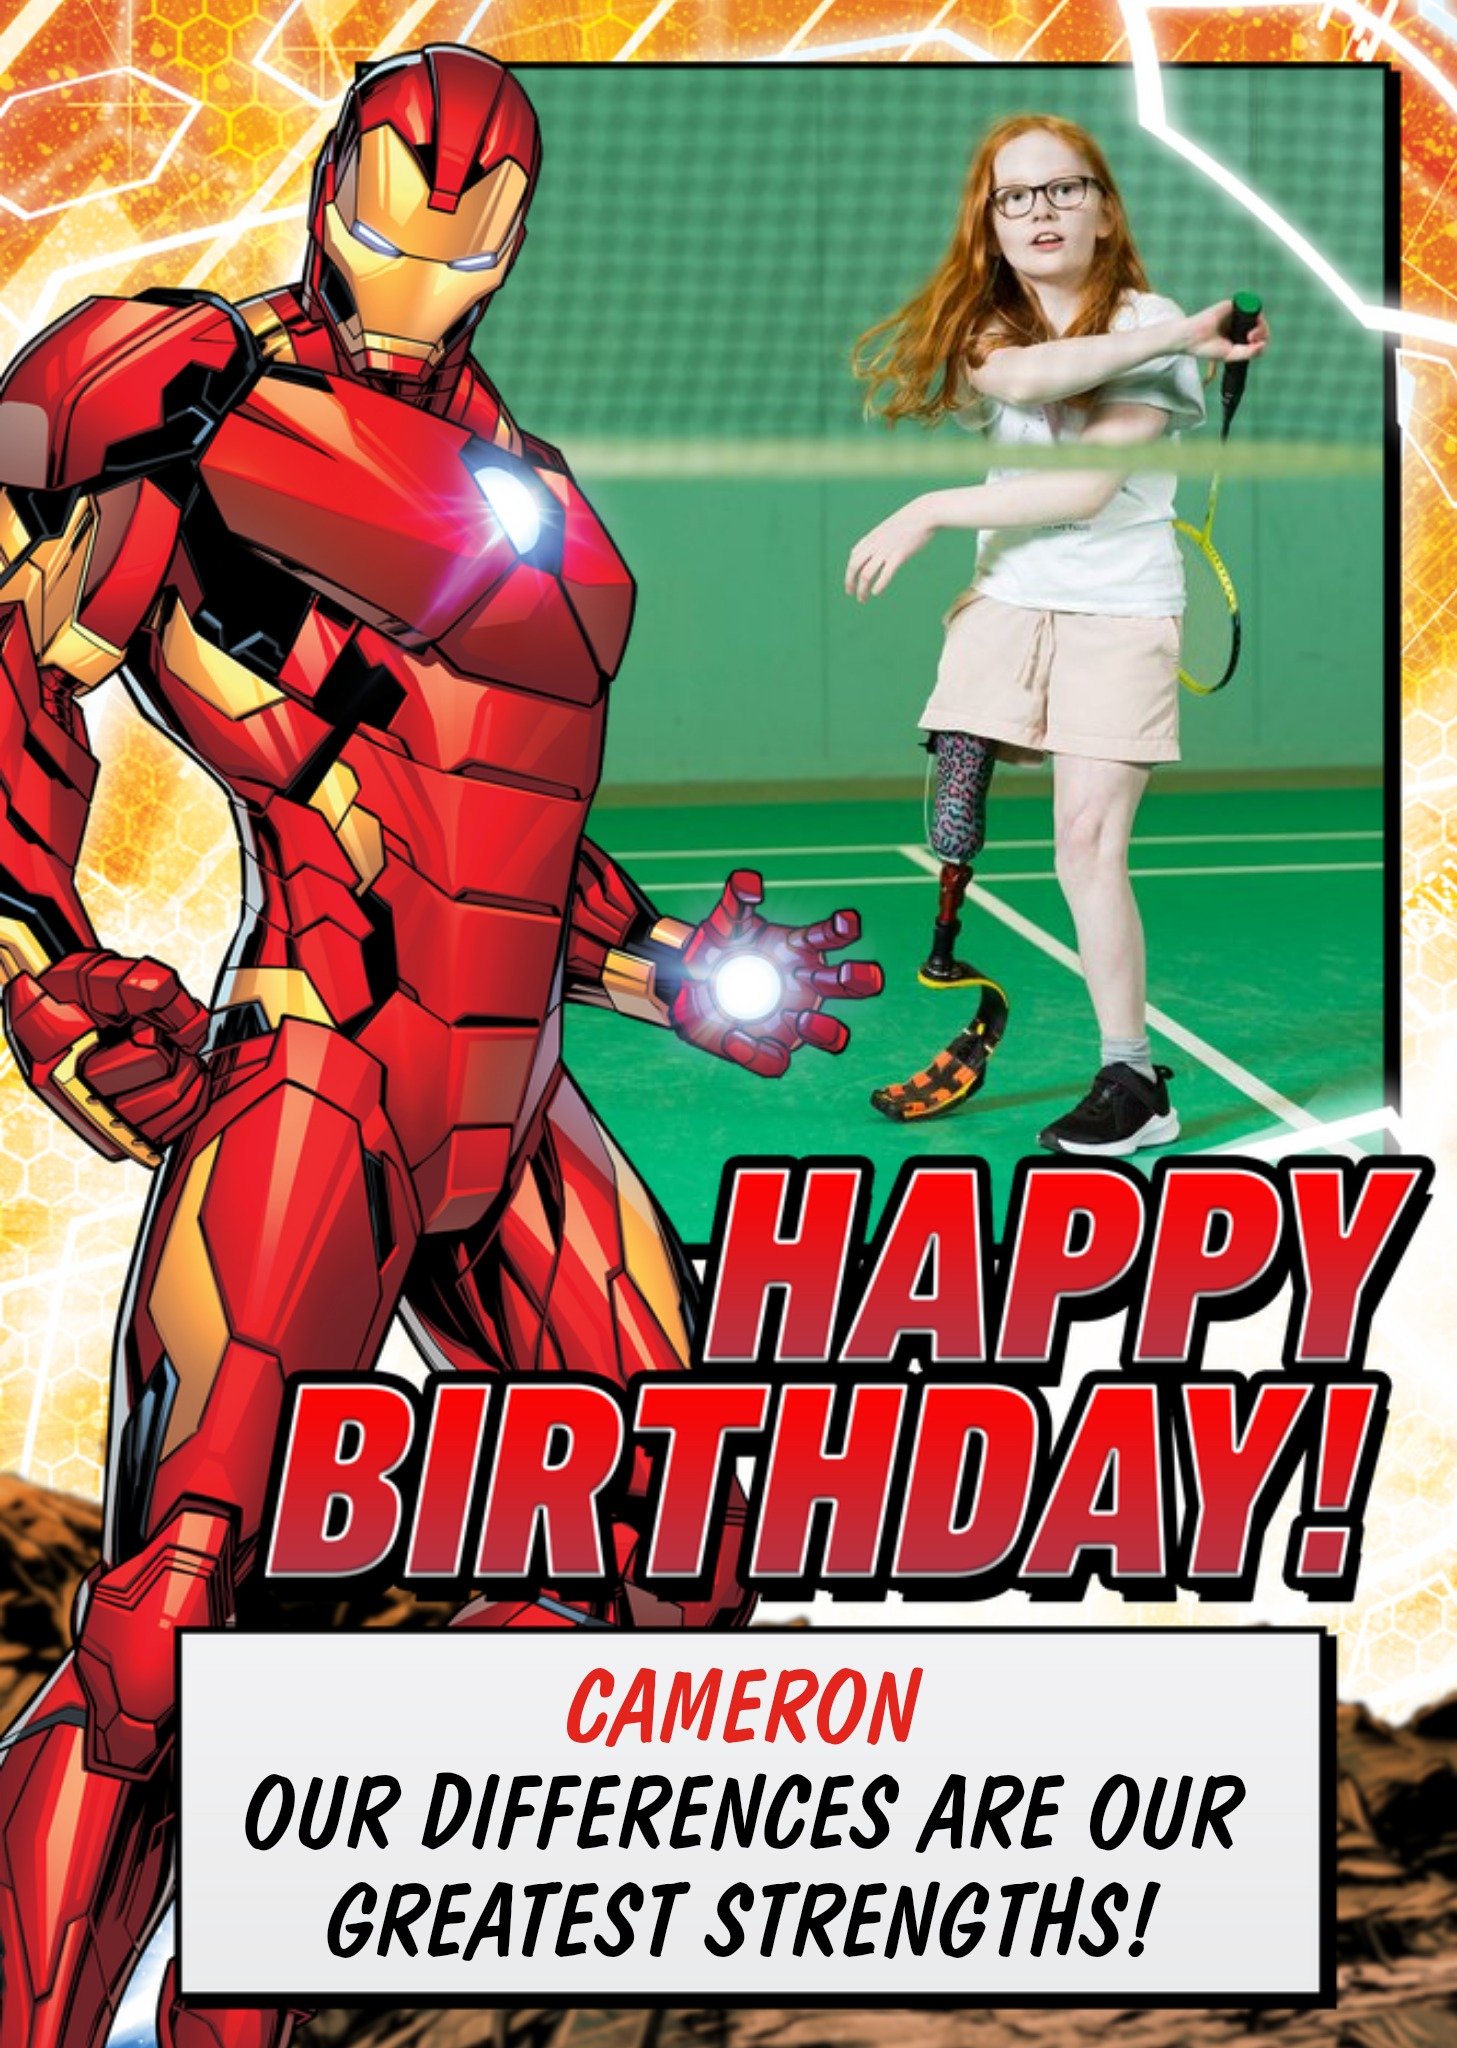 Marvel Avengers Iron Man Comic Book Style Photo Upload Birthday Card Ecard